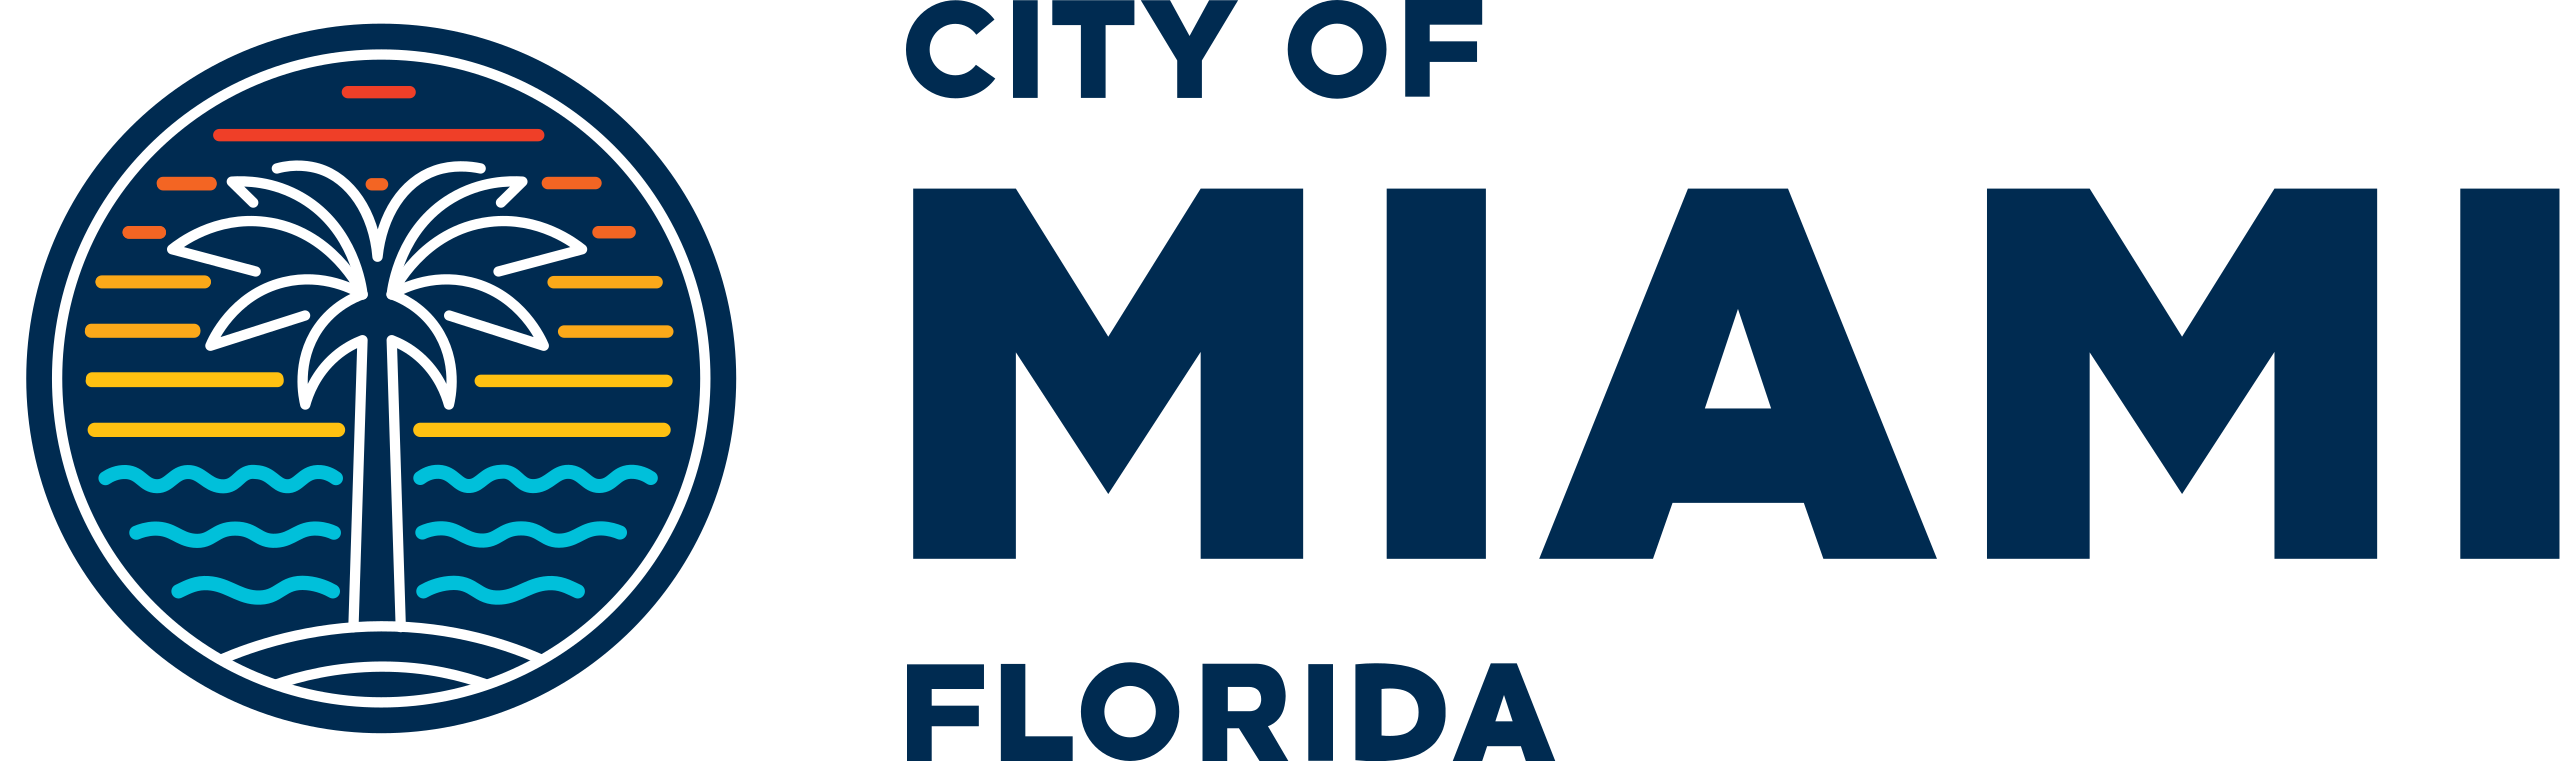 City of Miami Florida logo